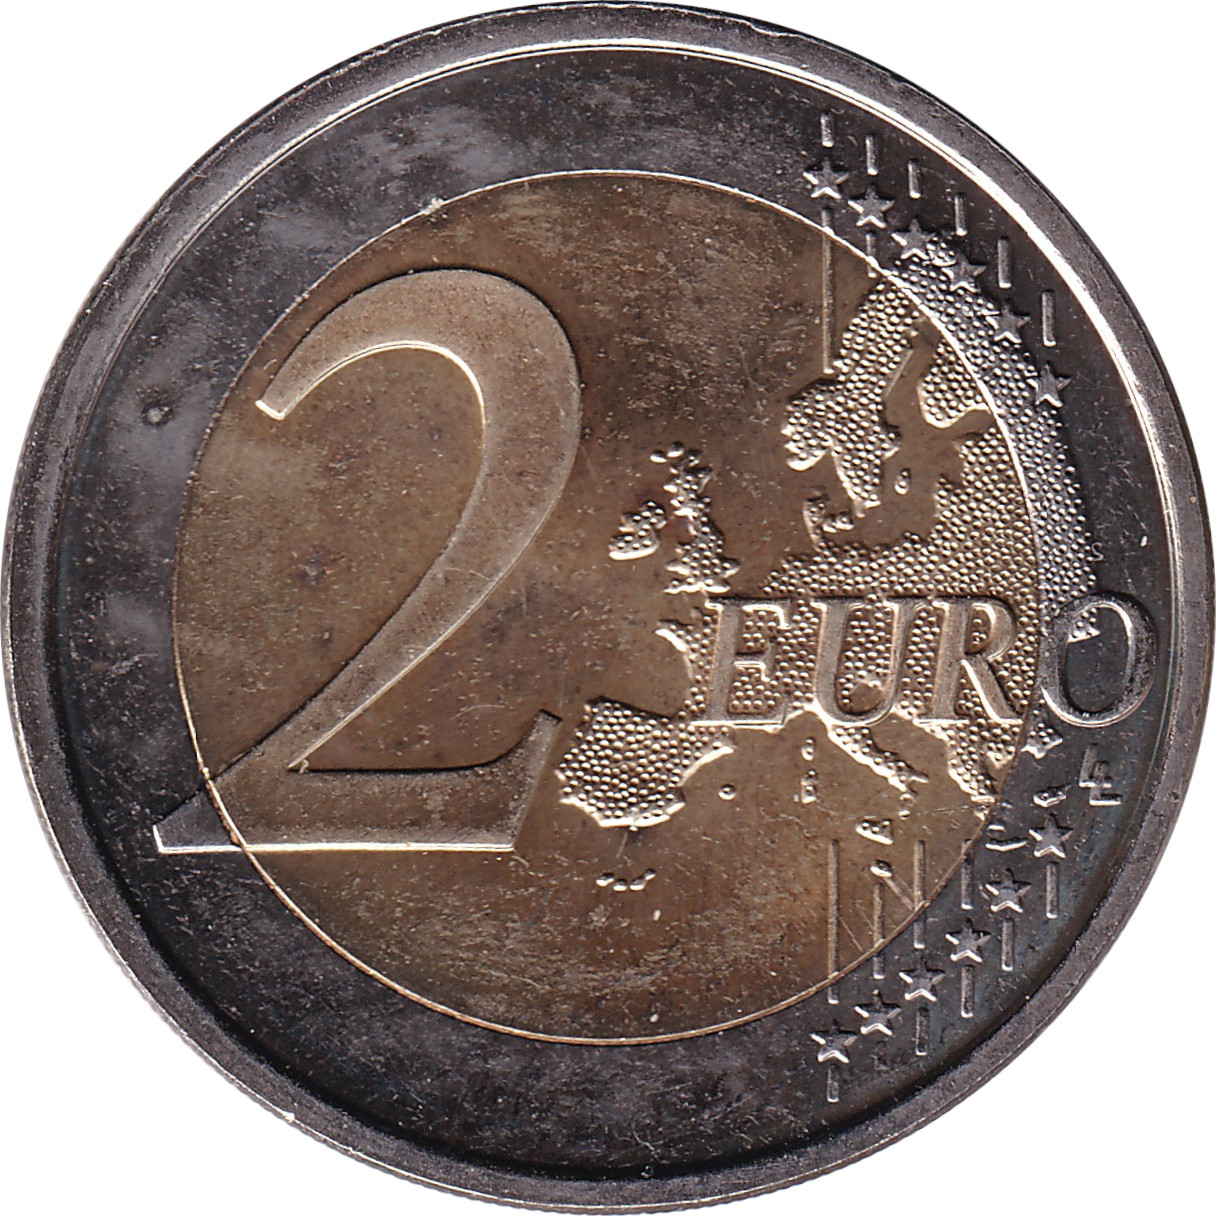 2 euro - Akseli Gallen Kallela